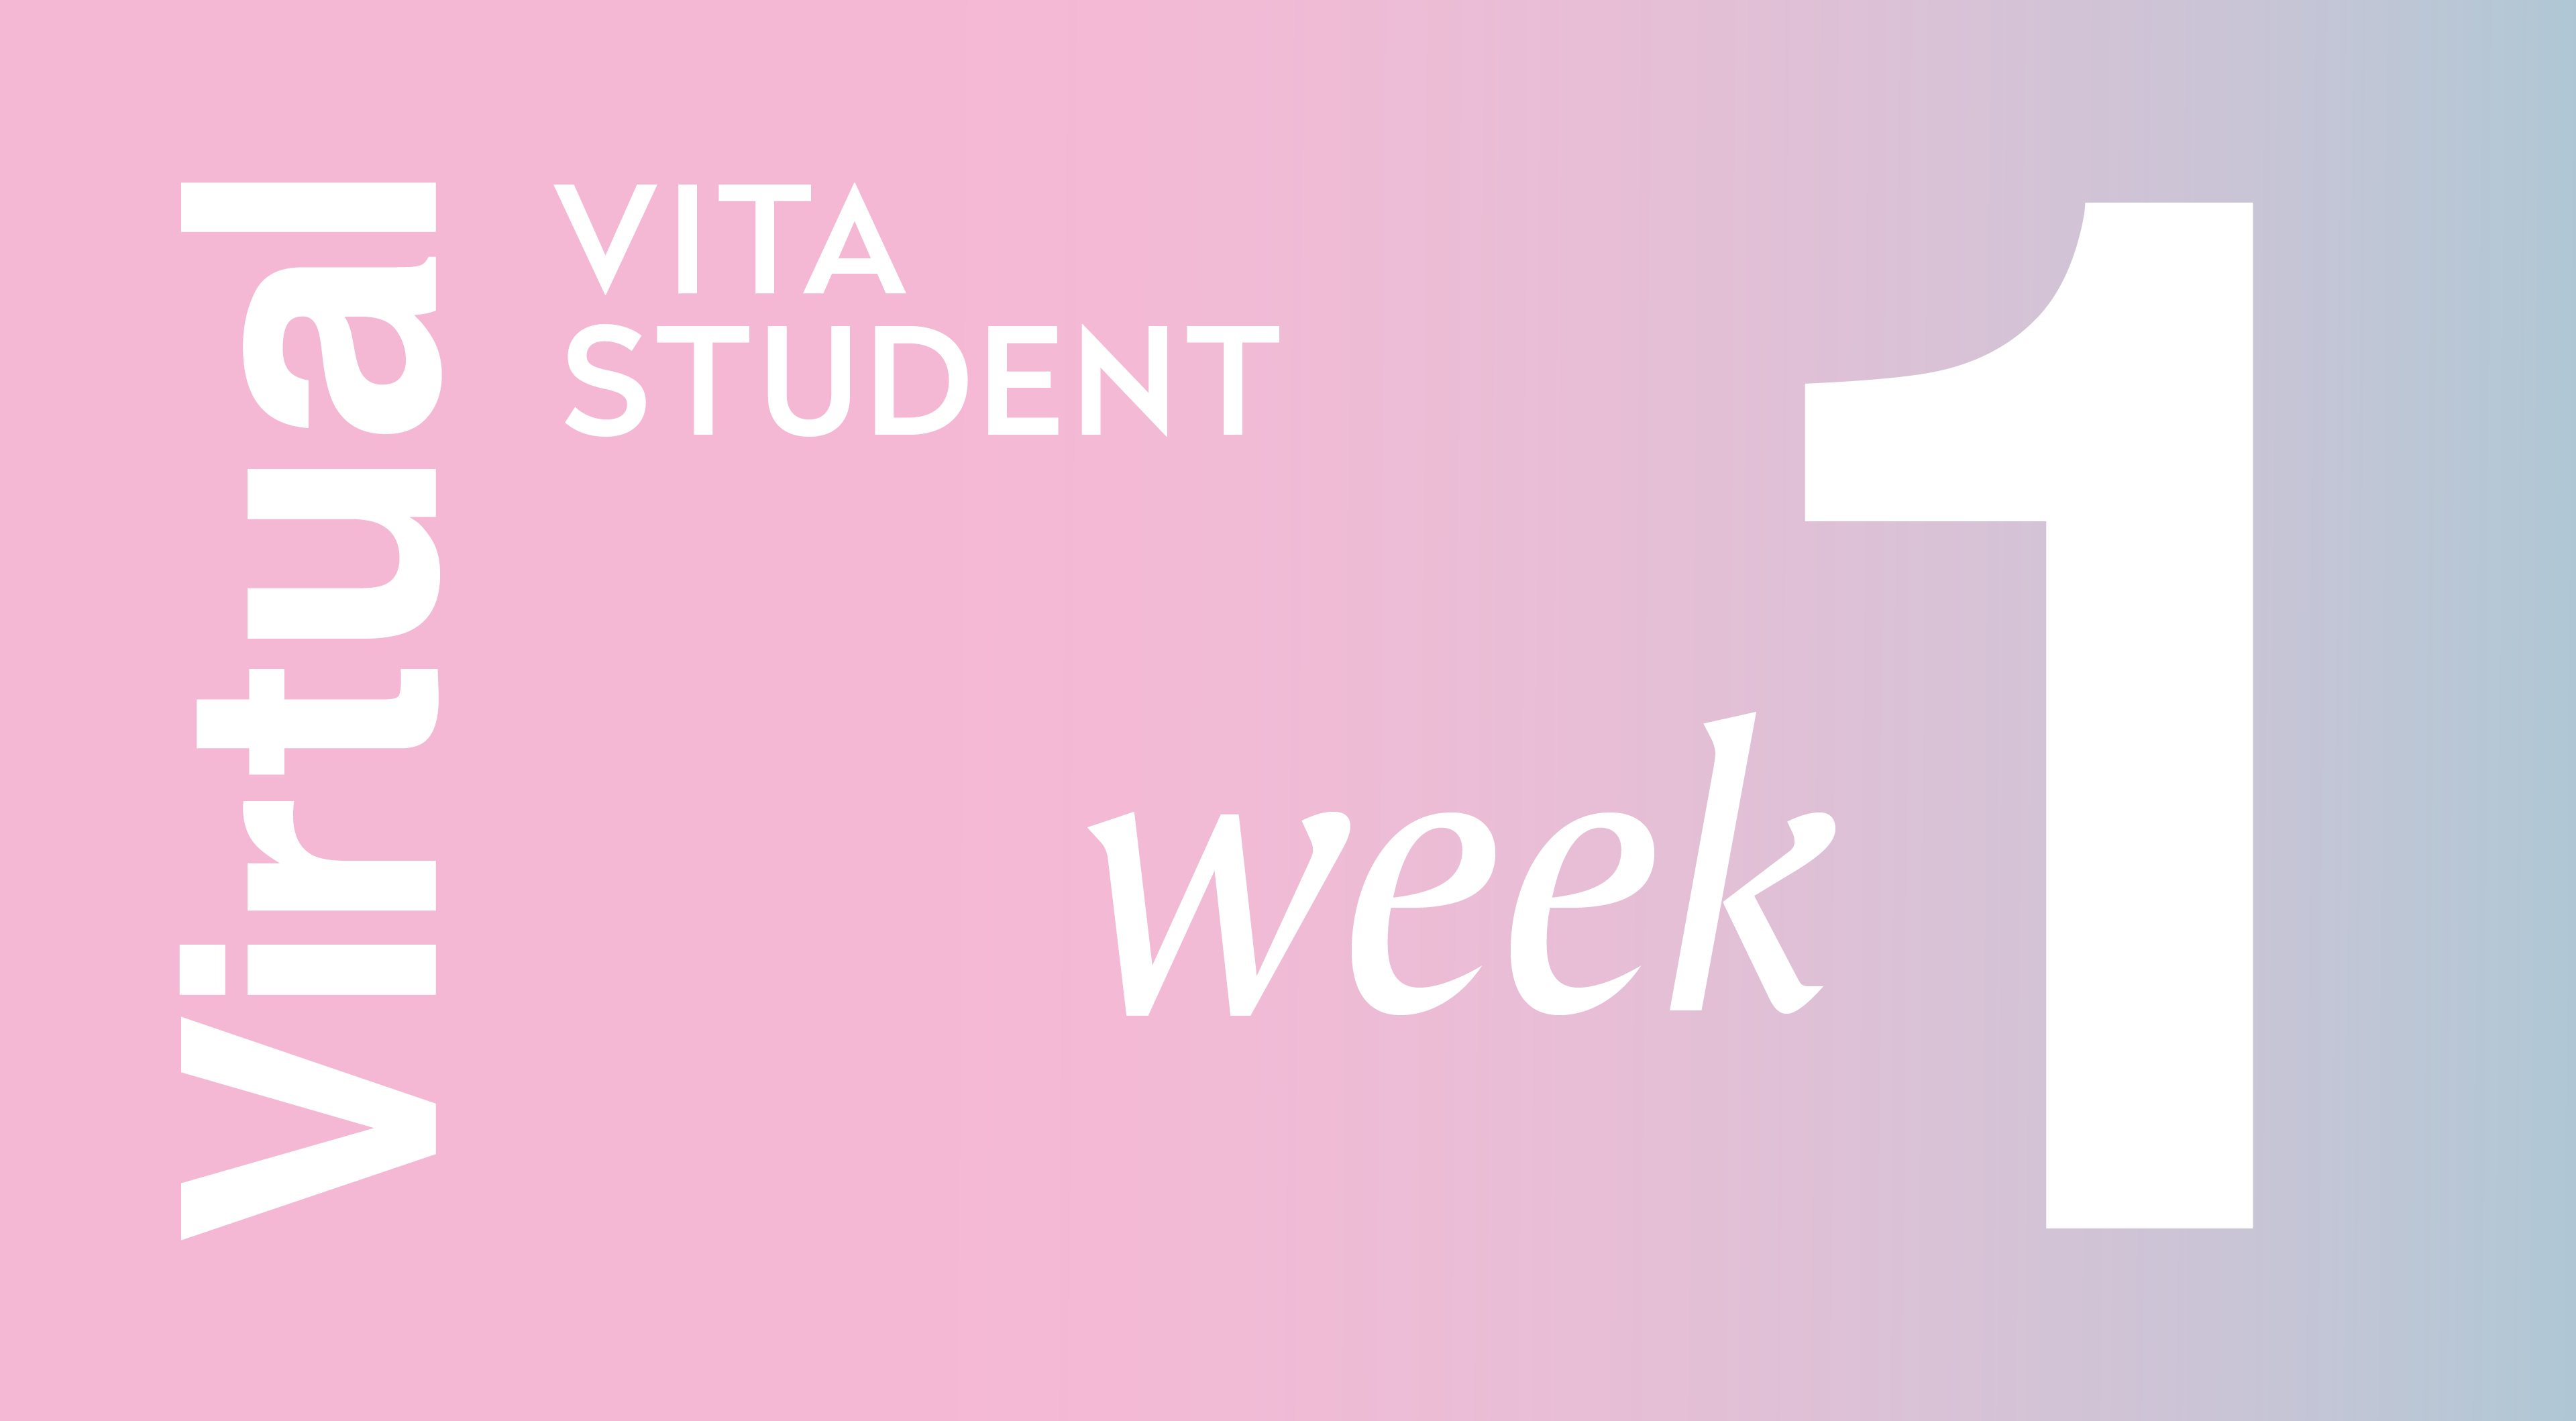 Vita student week 1.